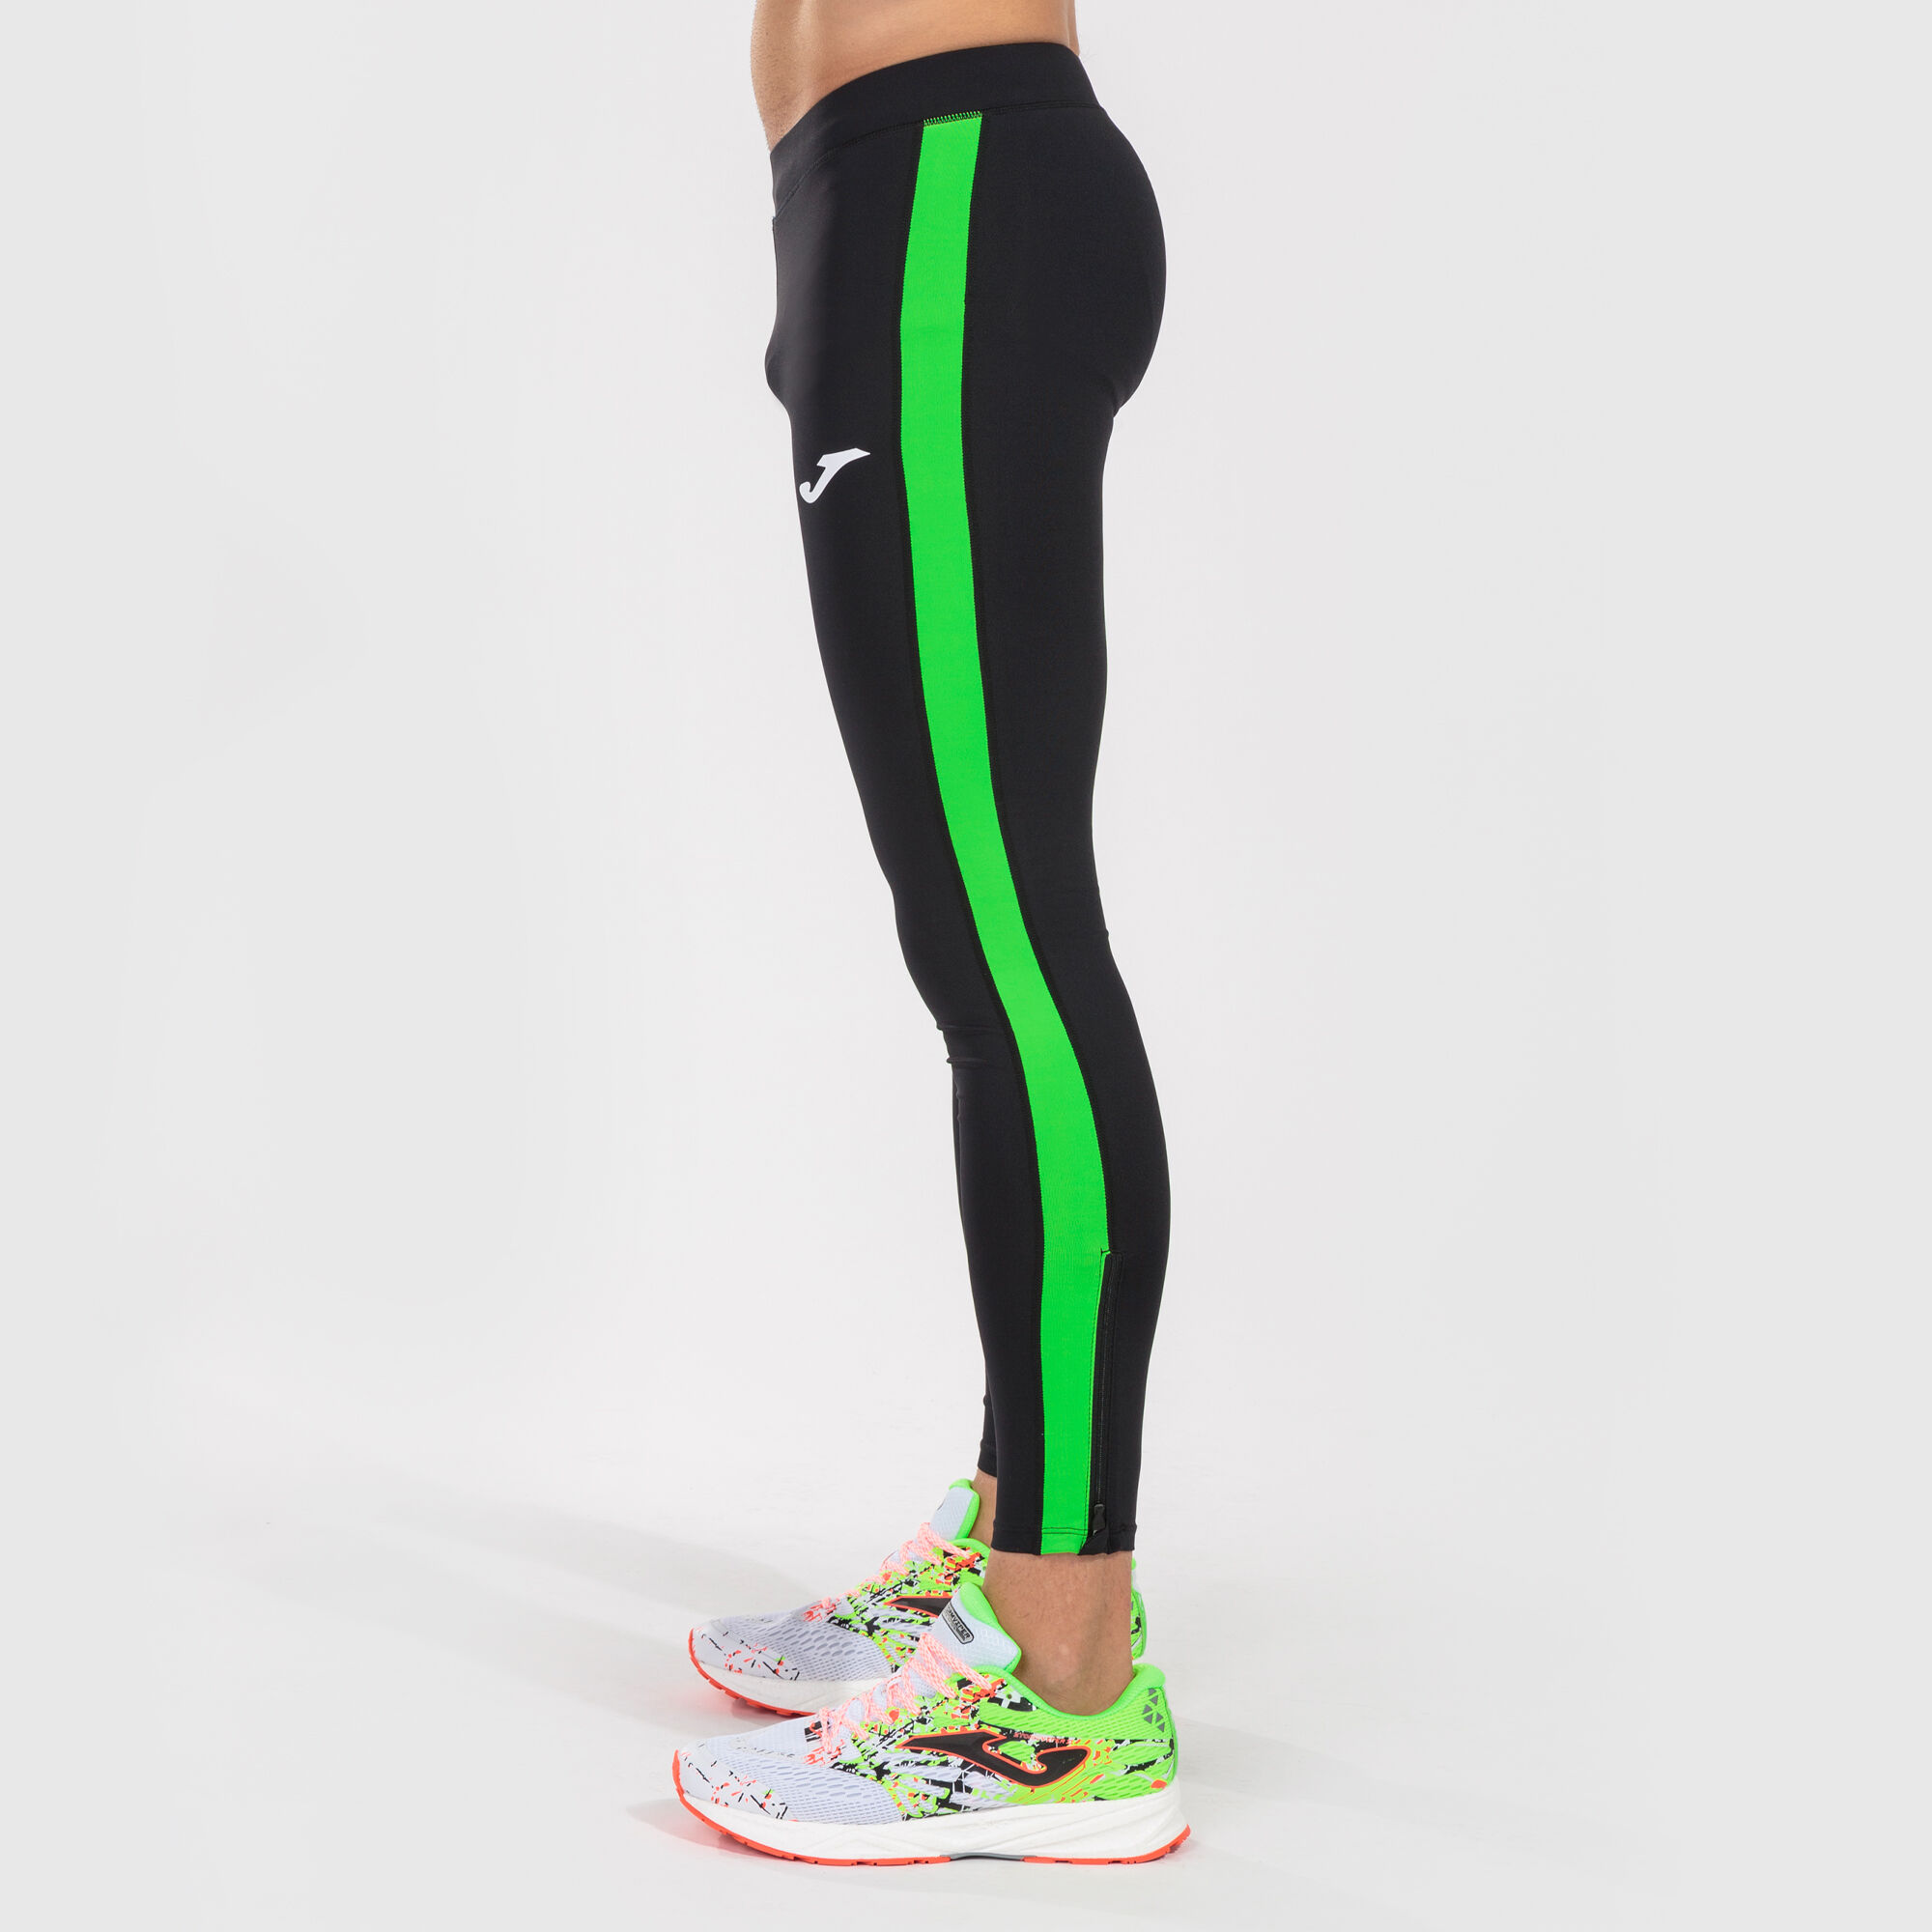 Long tights unisex Elite VII black fluorescent green